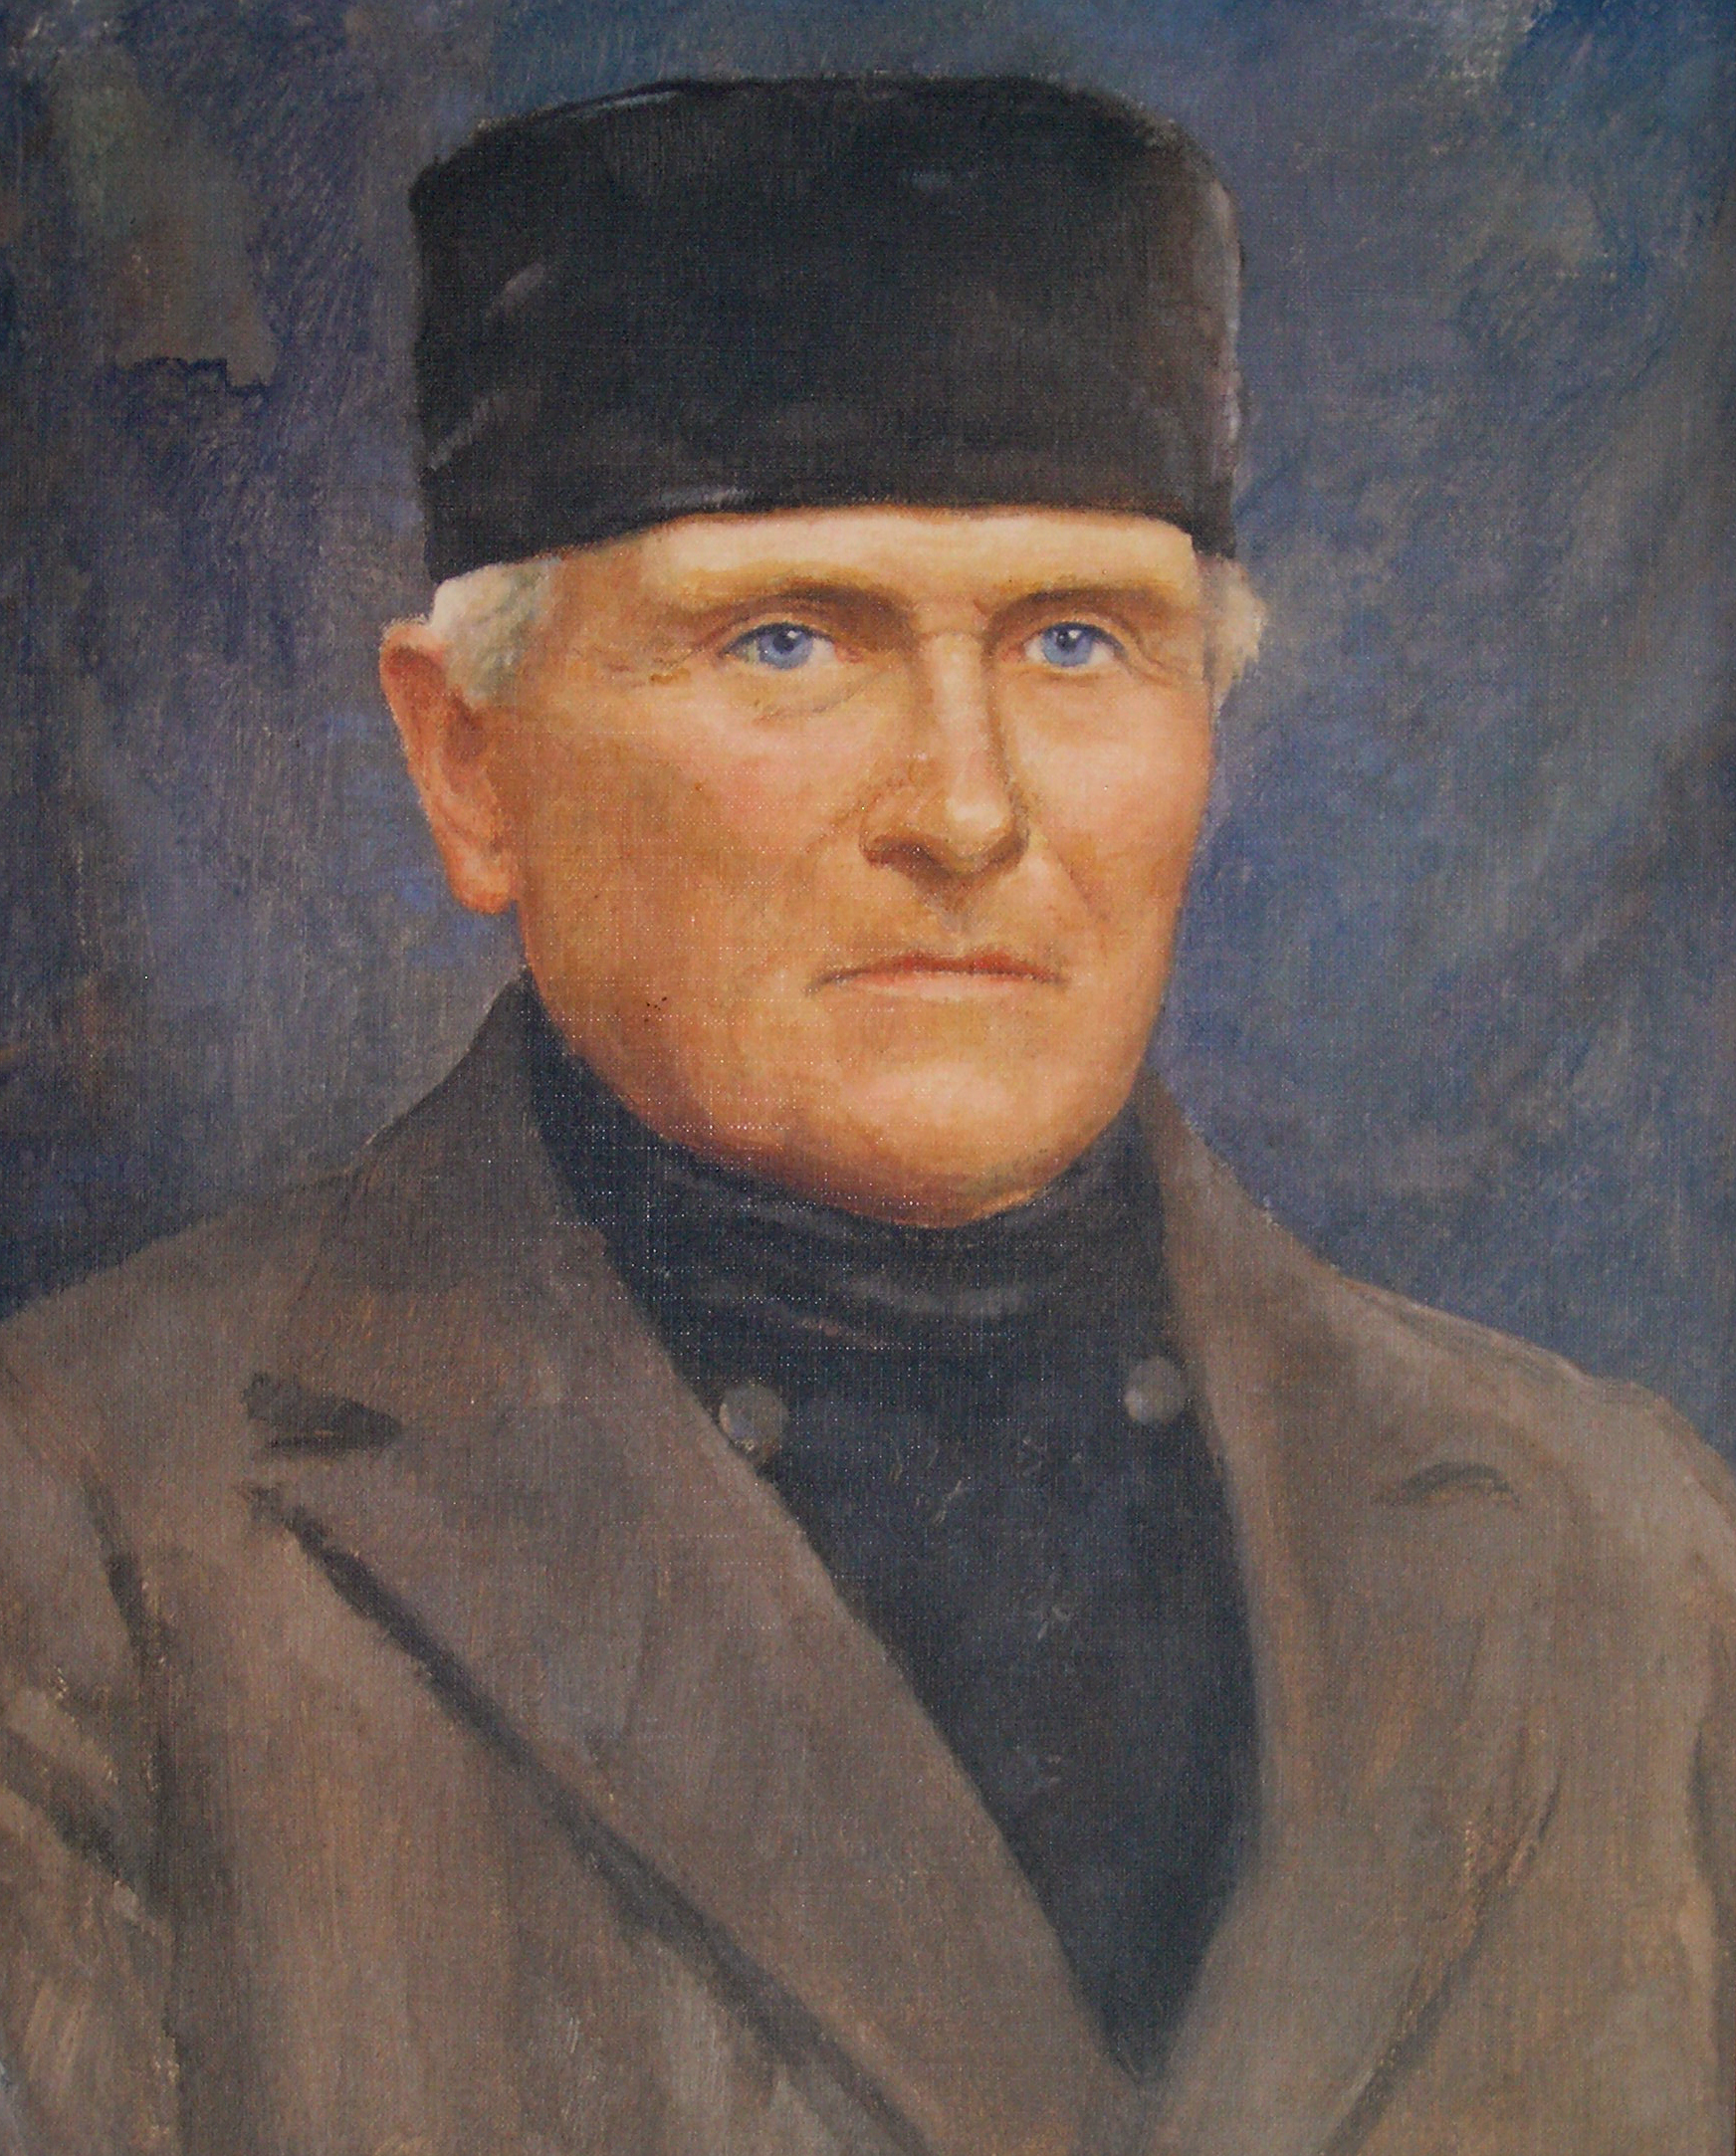 Company founder Matthias Christian Rabbethge (1804 - 1902)